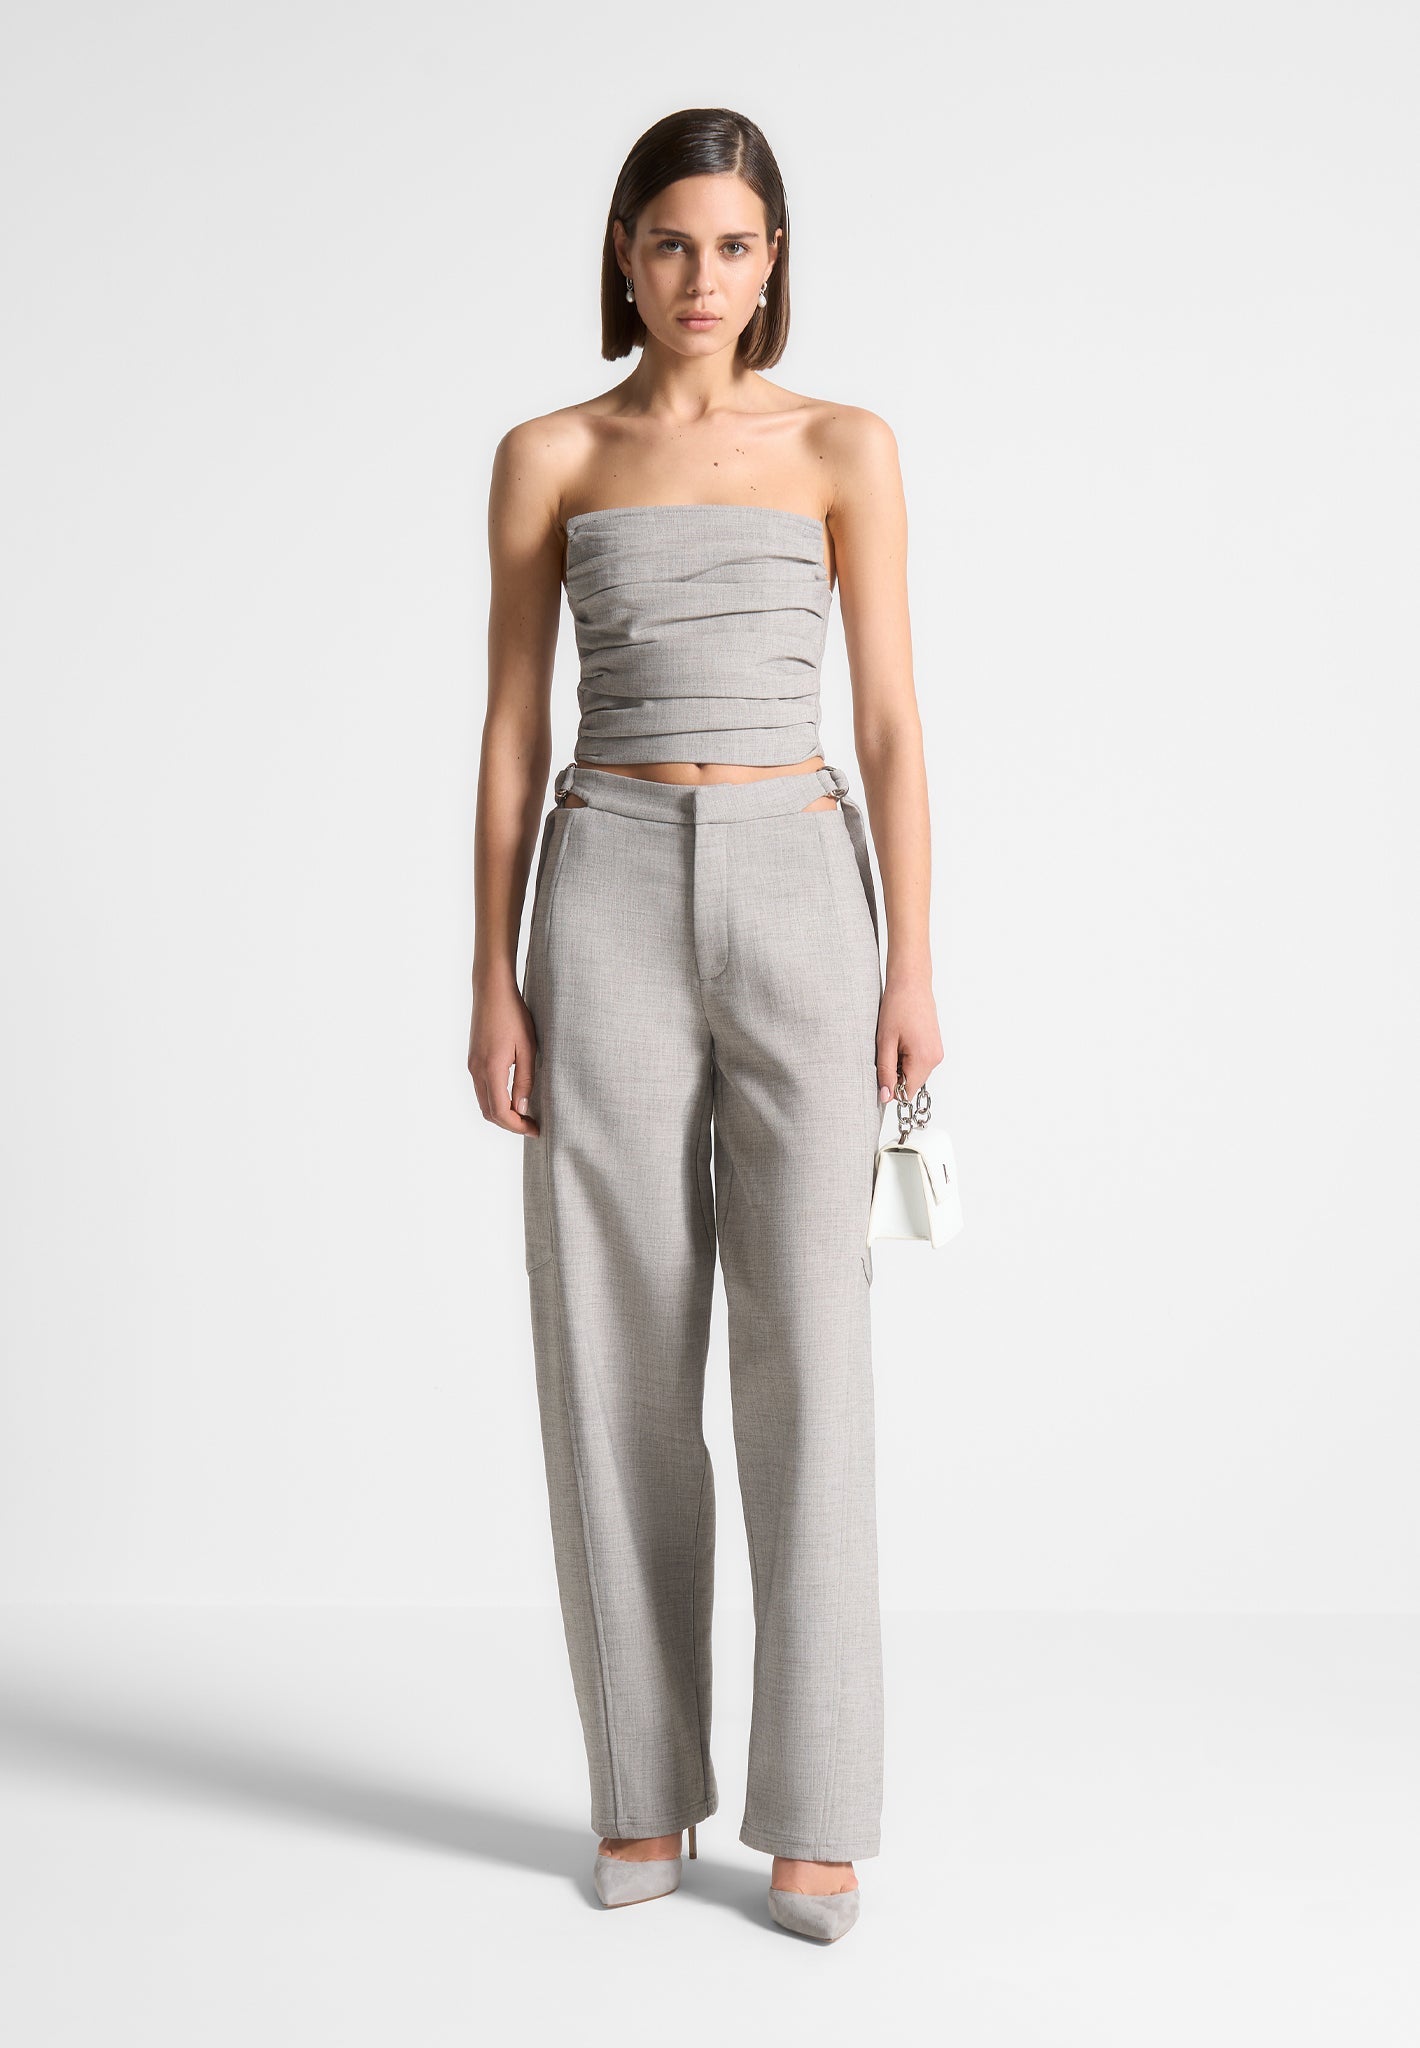 Get Comfortable with Prisma's Grey Melange Slim Fit Track Pant